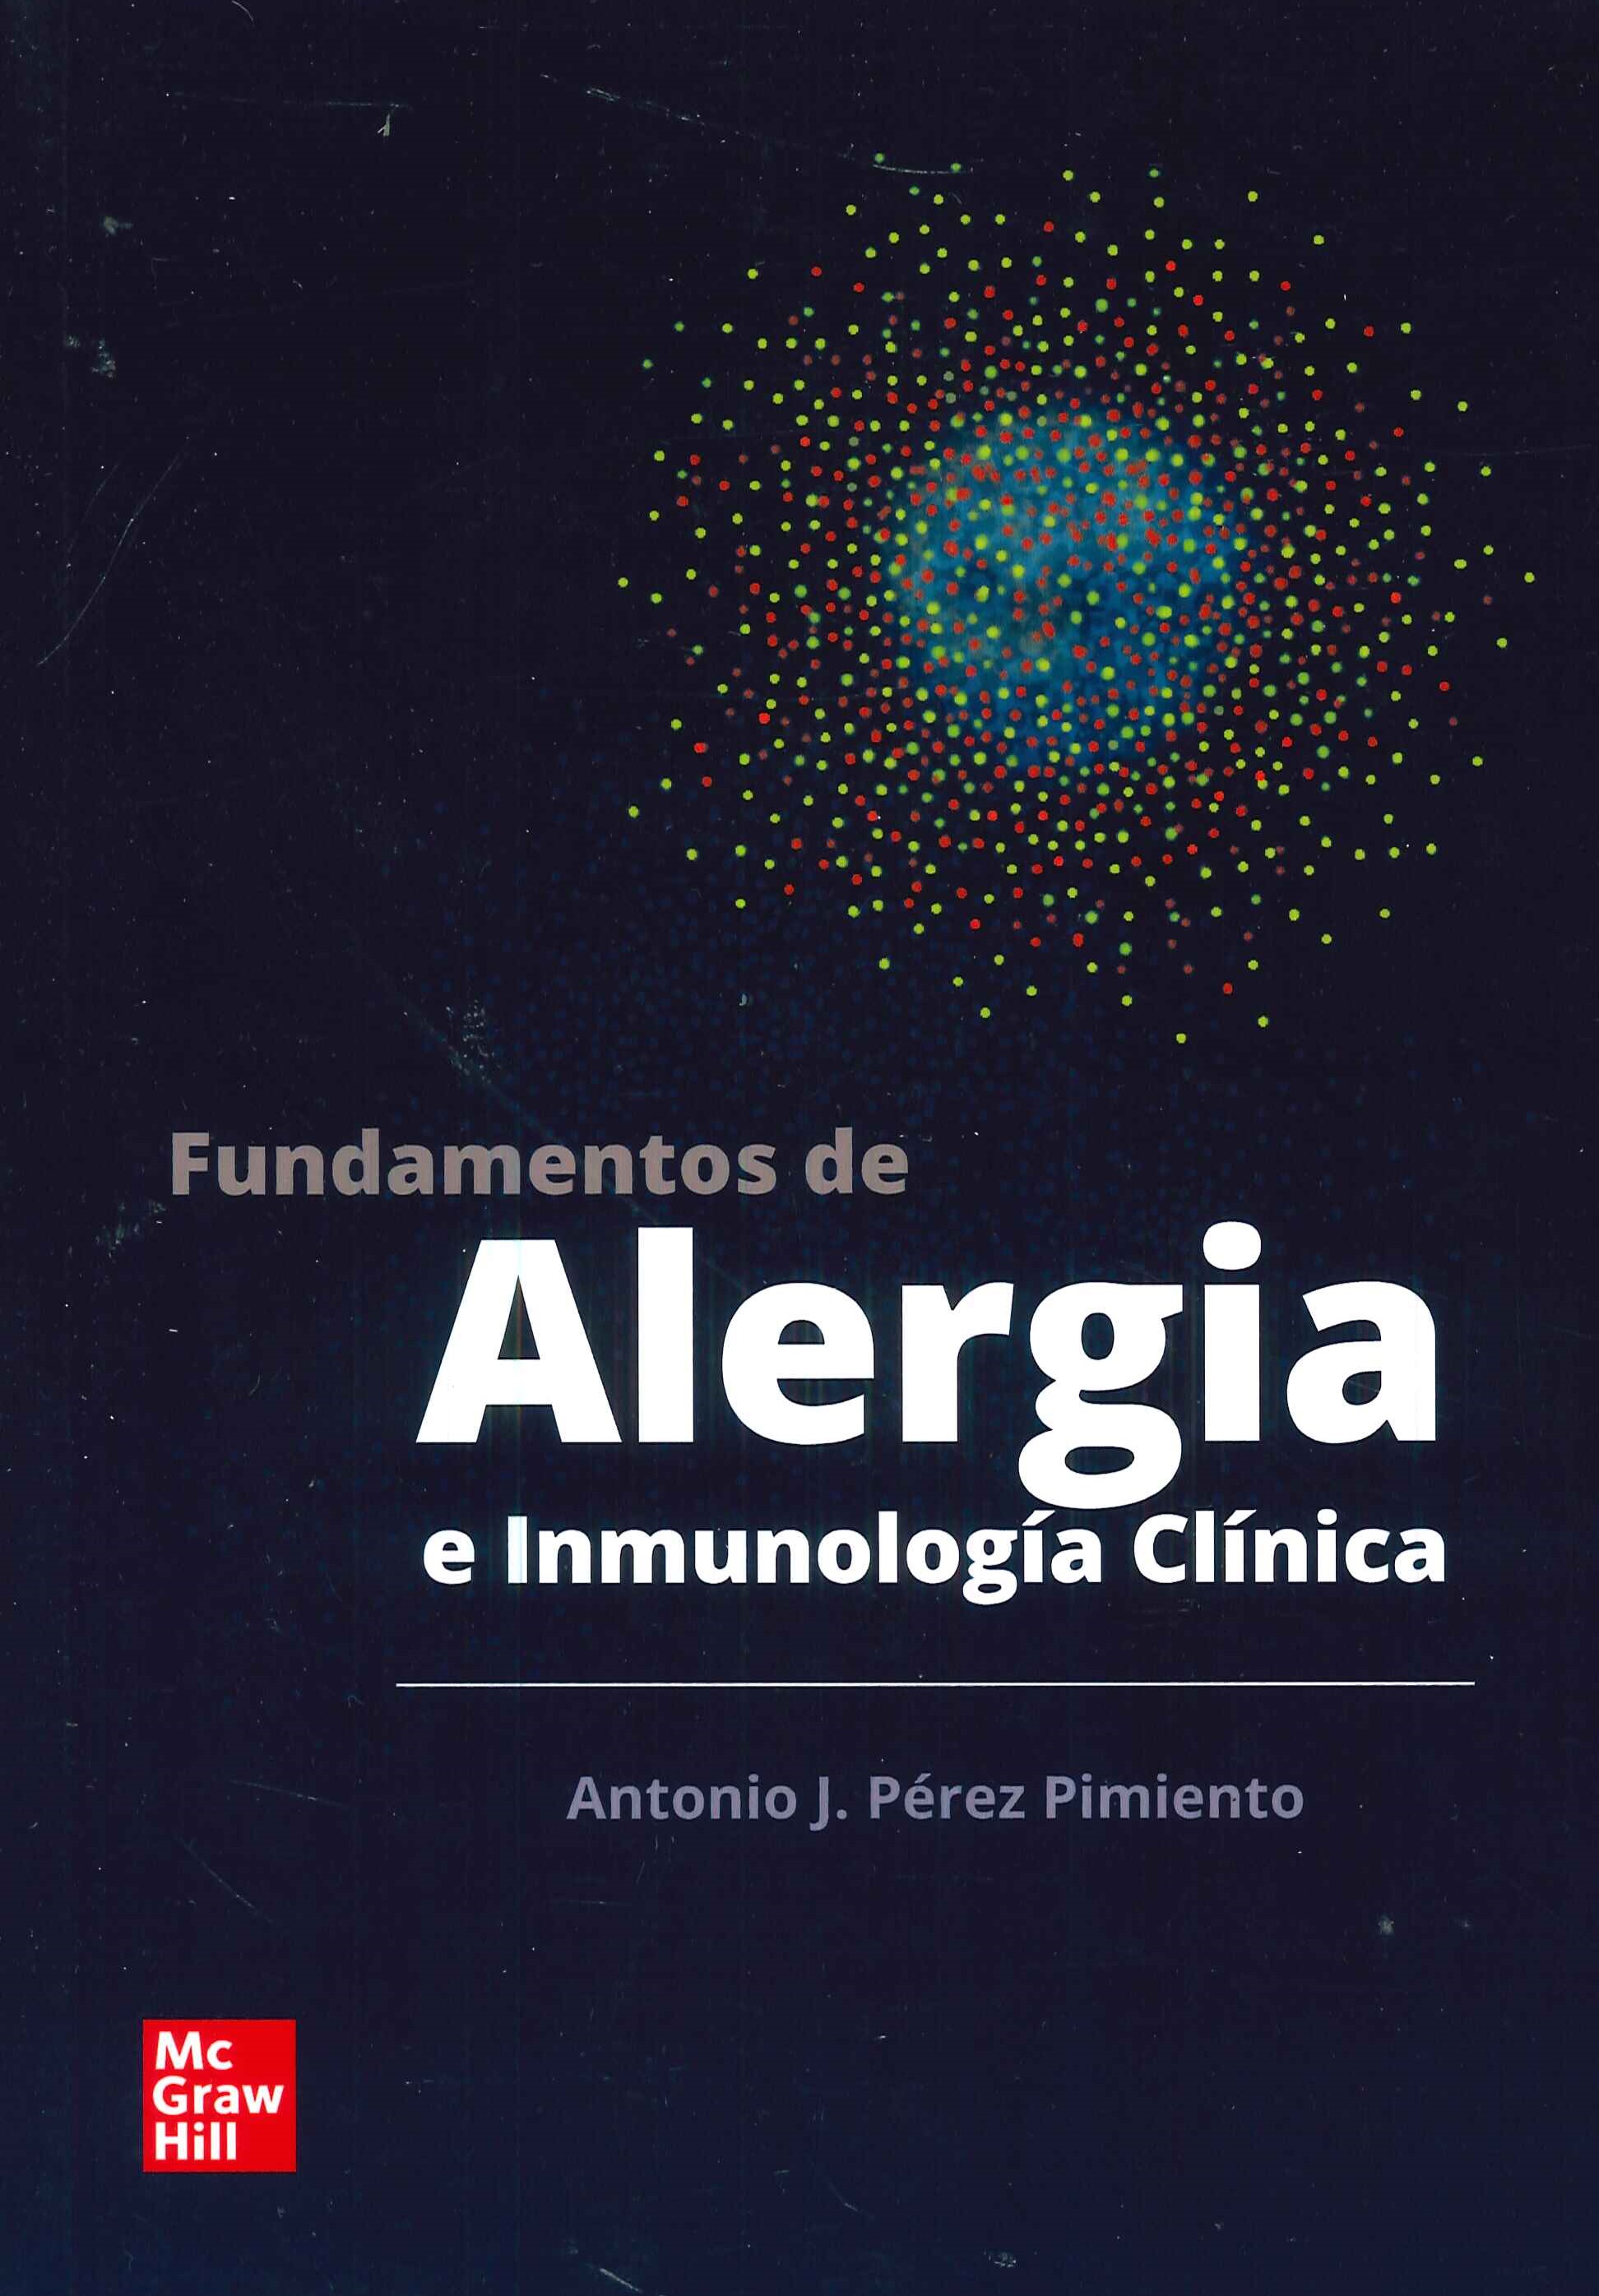 Fundamentos de Alergia e Inmunología Clínica